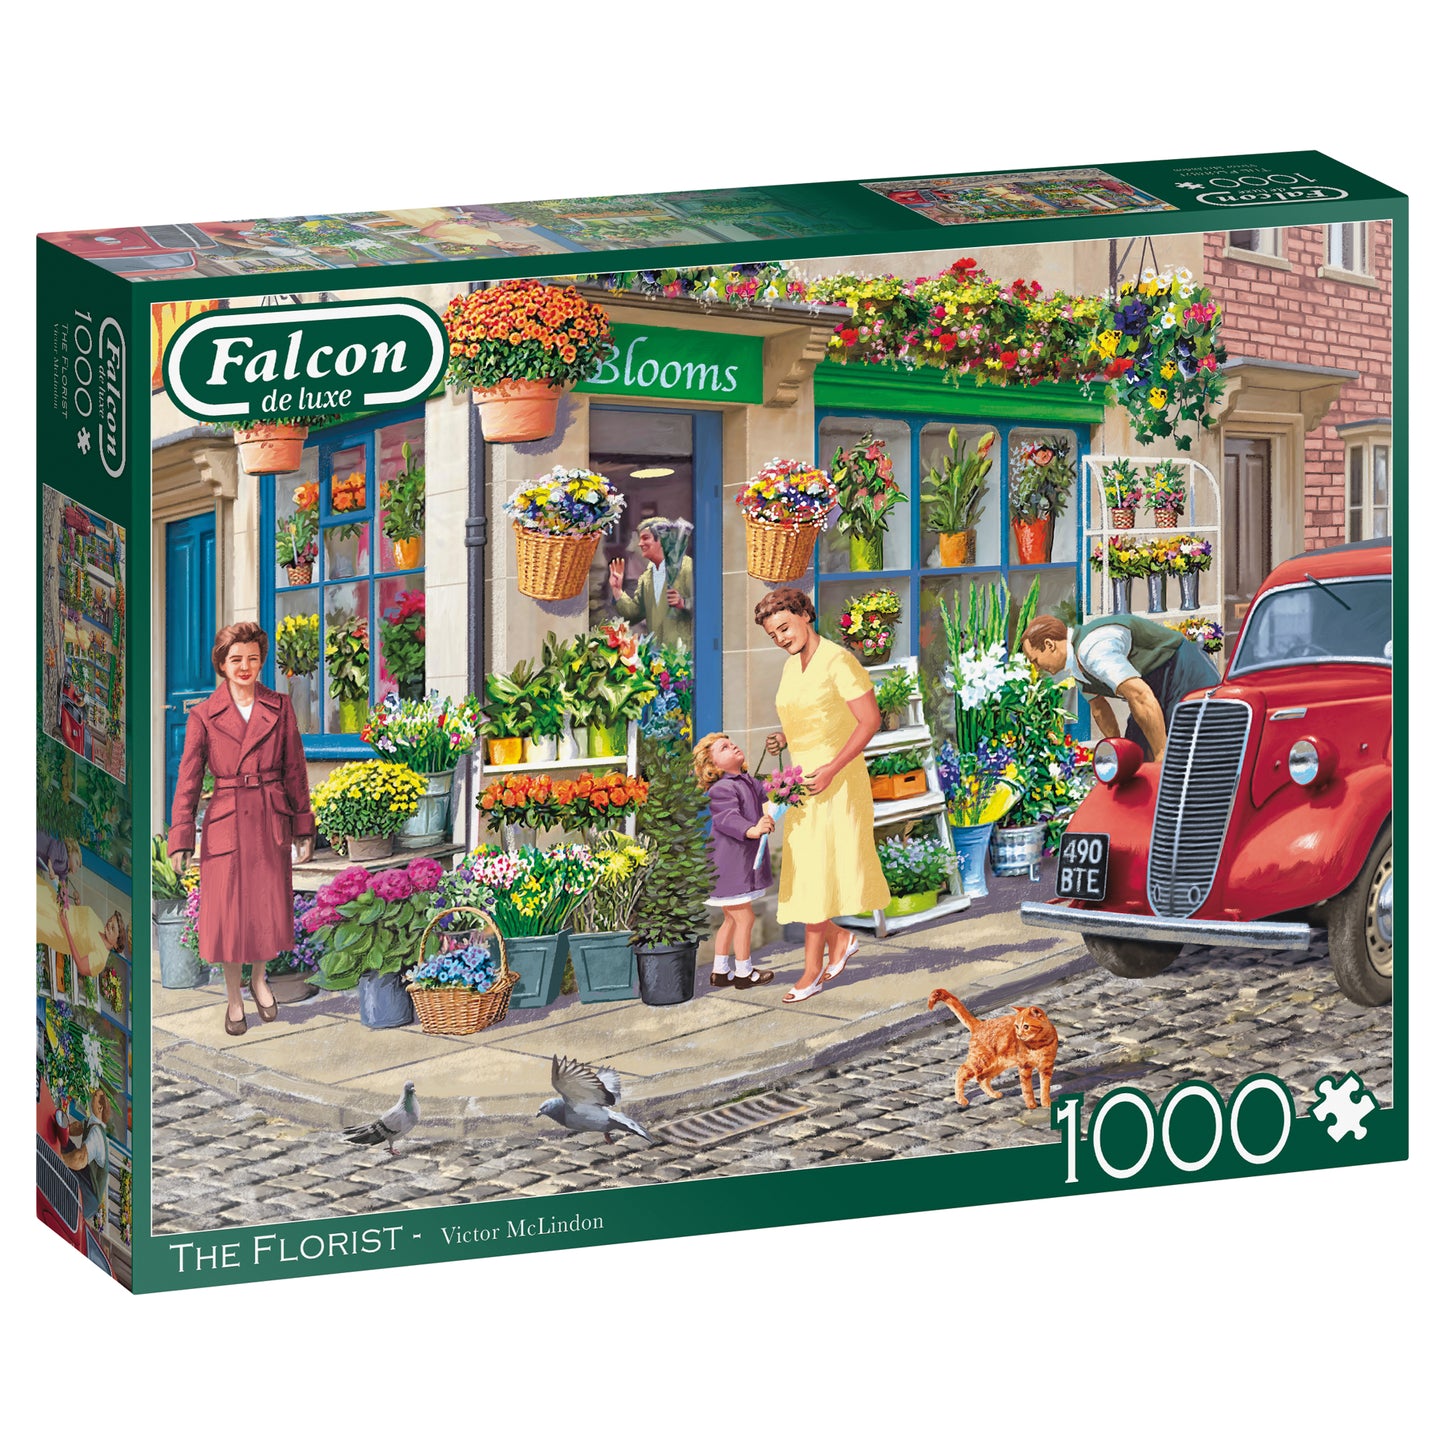 Falcon - The Florist (1000 pieces) - product image - Jumboplay.com